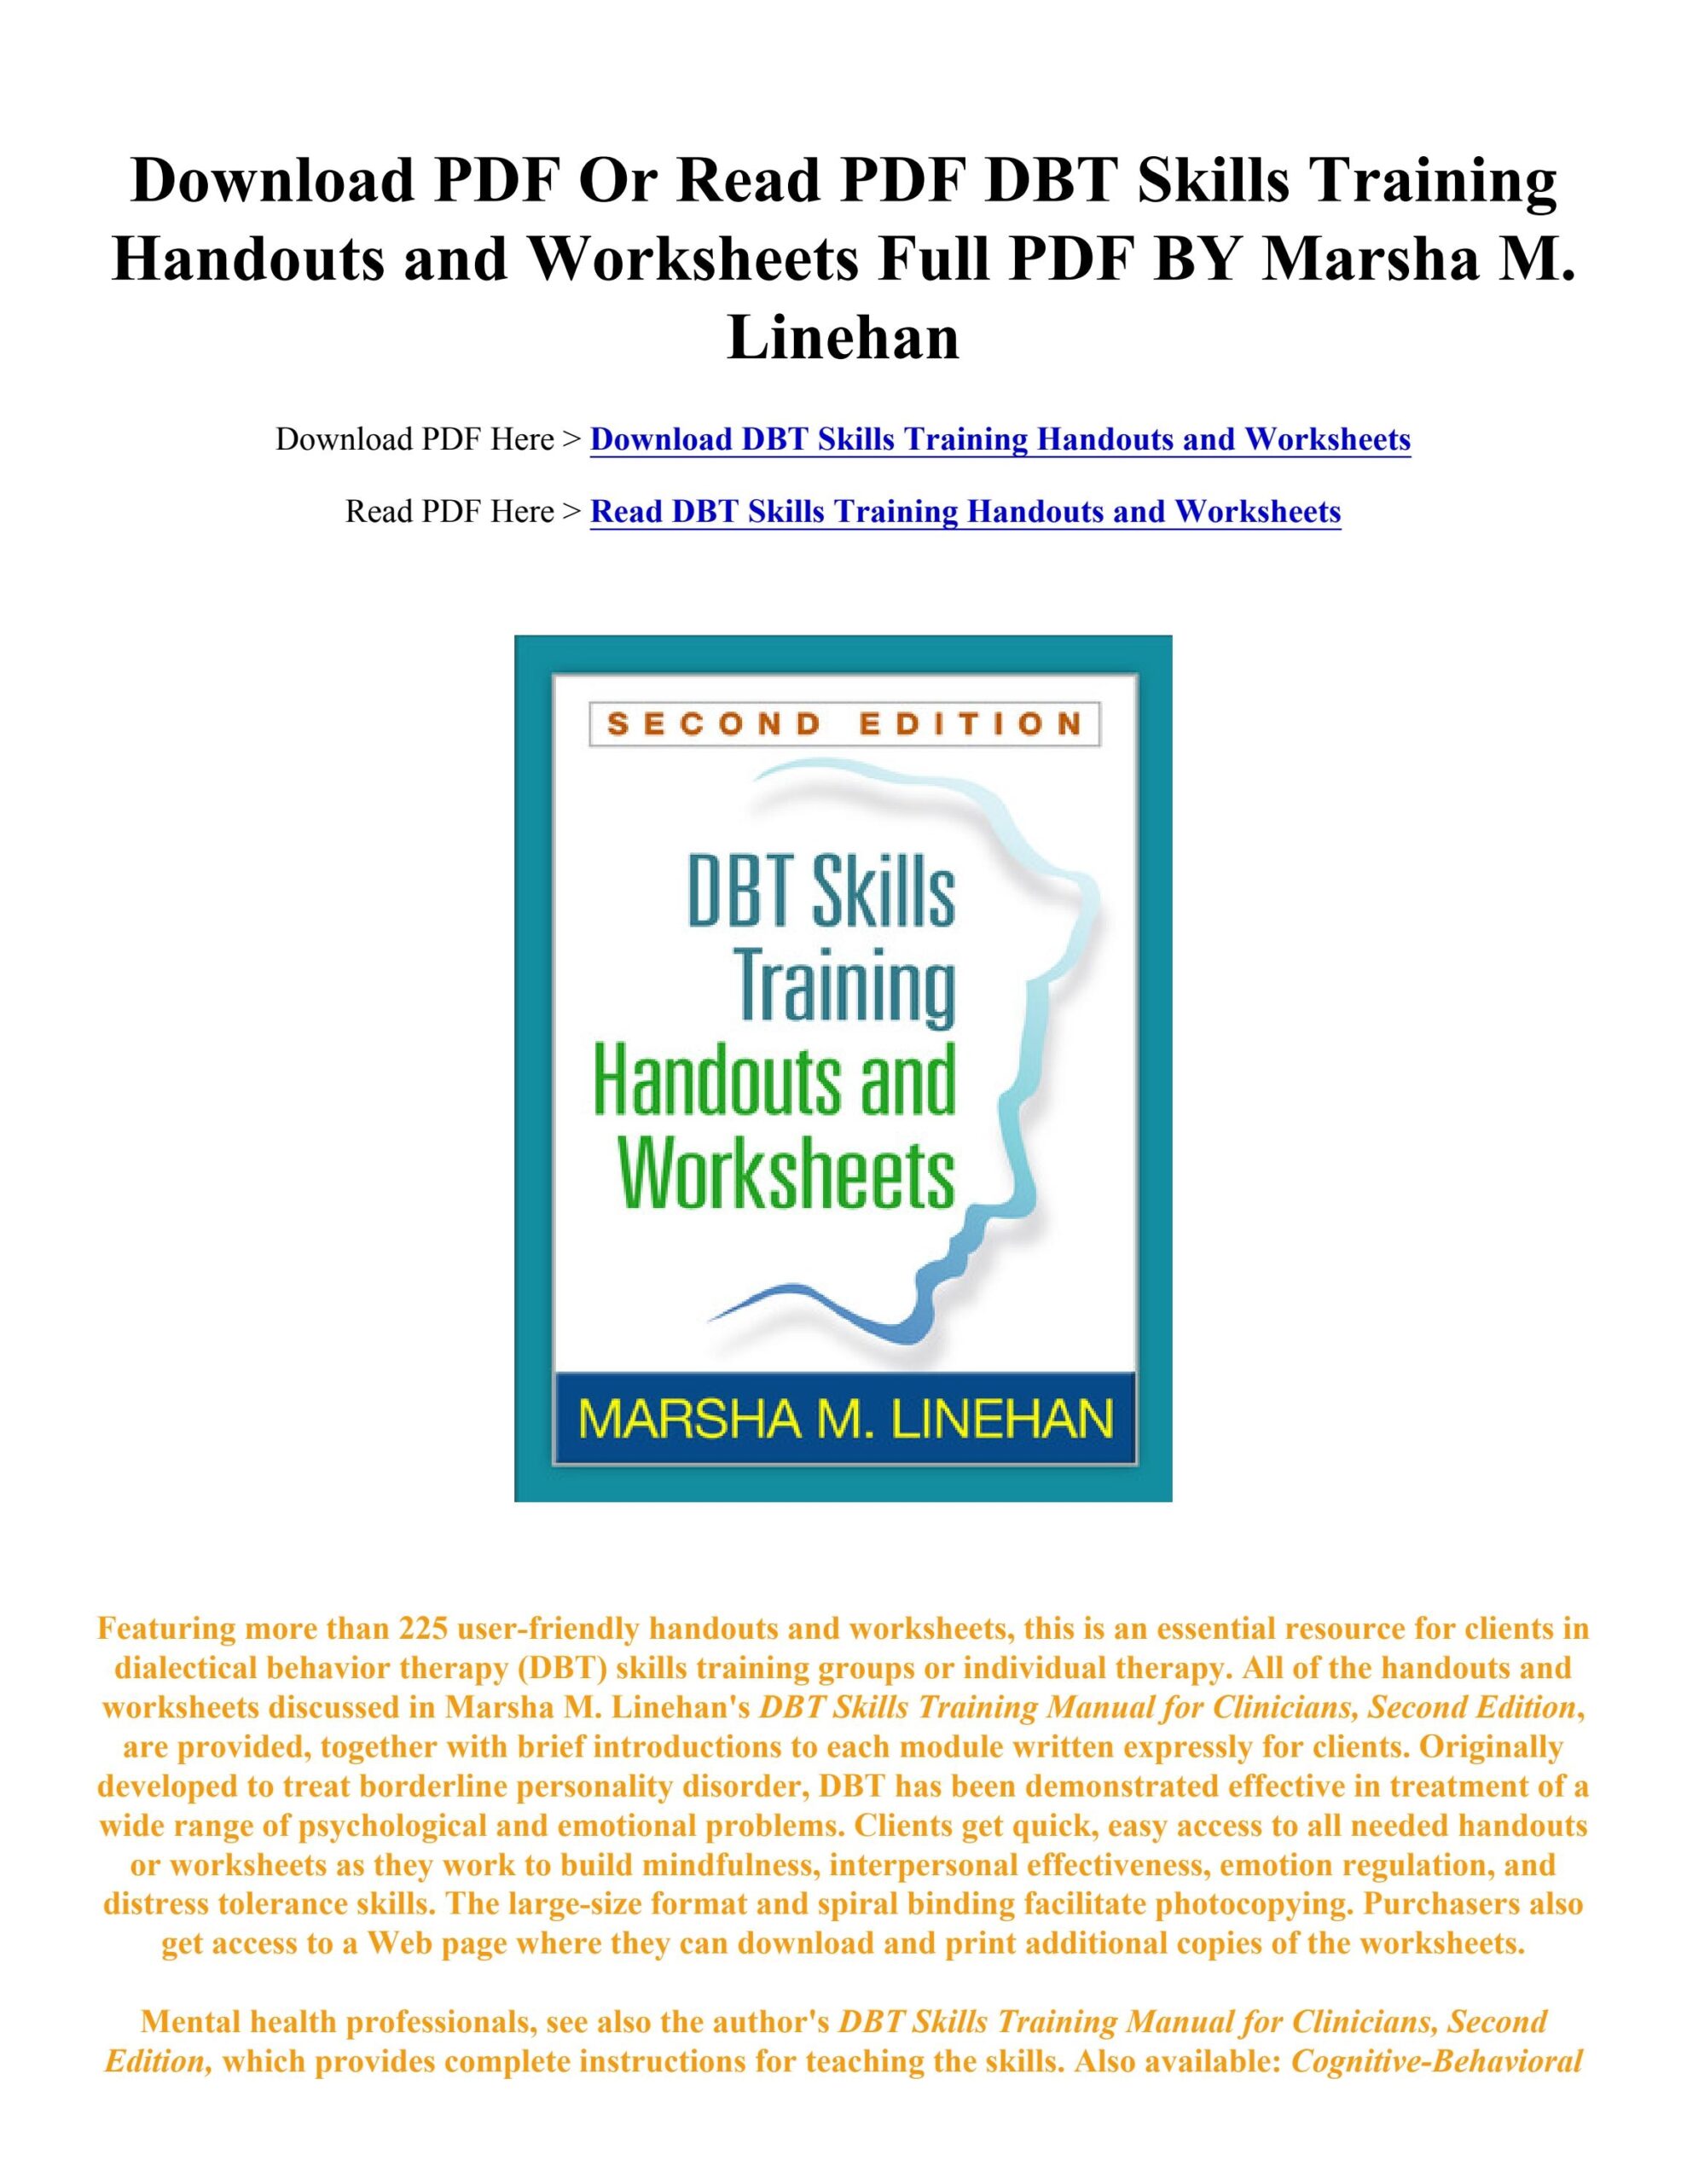 Dbt Skills Training Handouts And Worksheets Mindfulness Pdf